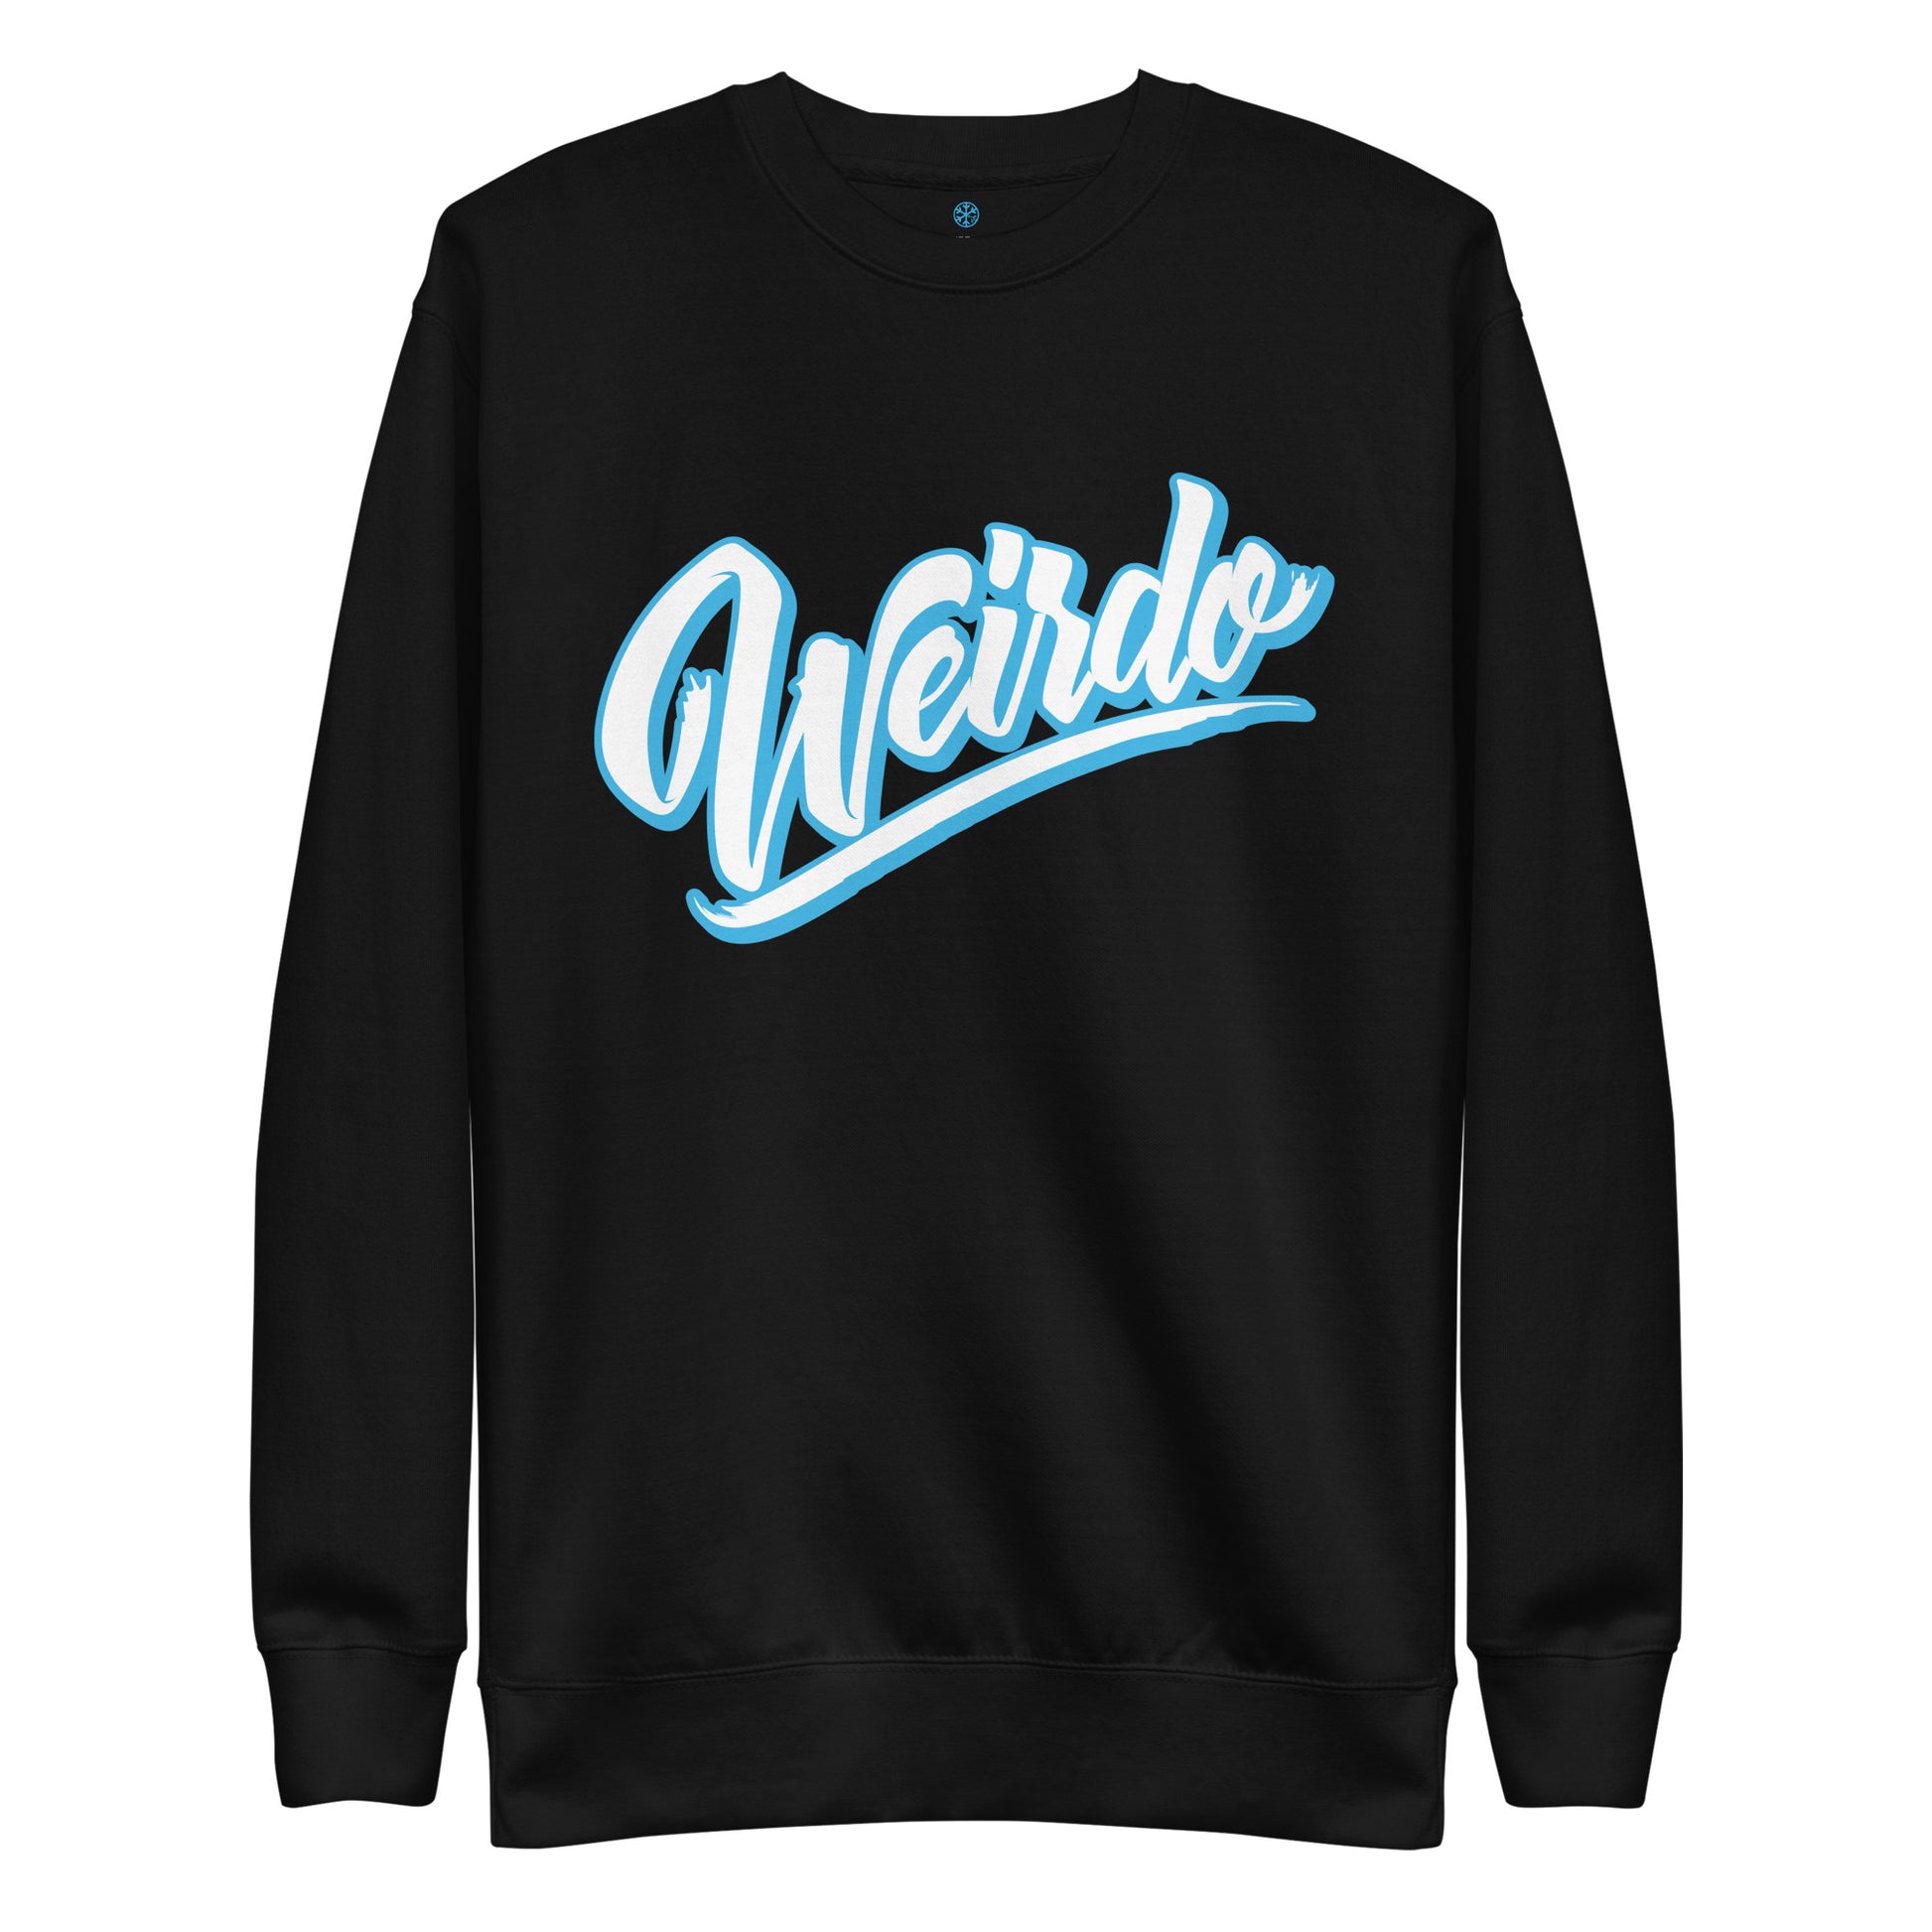 sweatshirt Weirdo black by B.Different Clothing independent streetwear brand inspired by street art graffiti